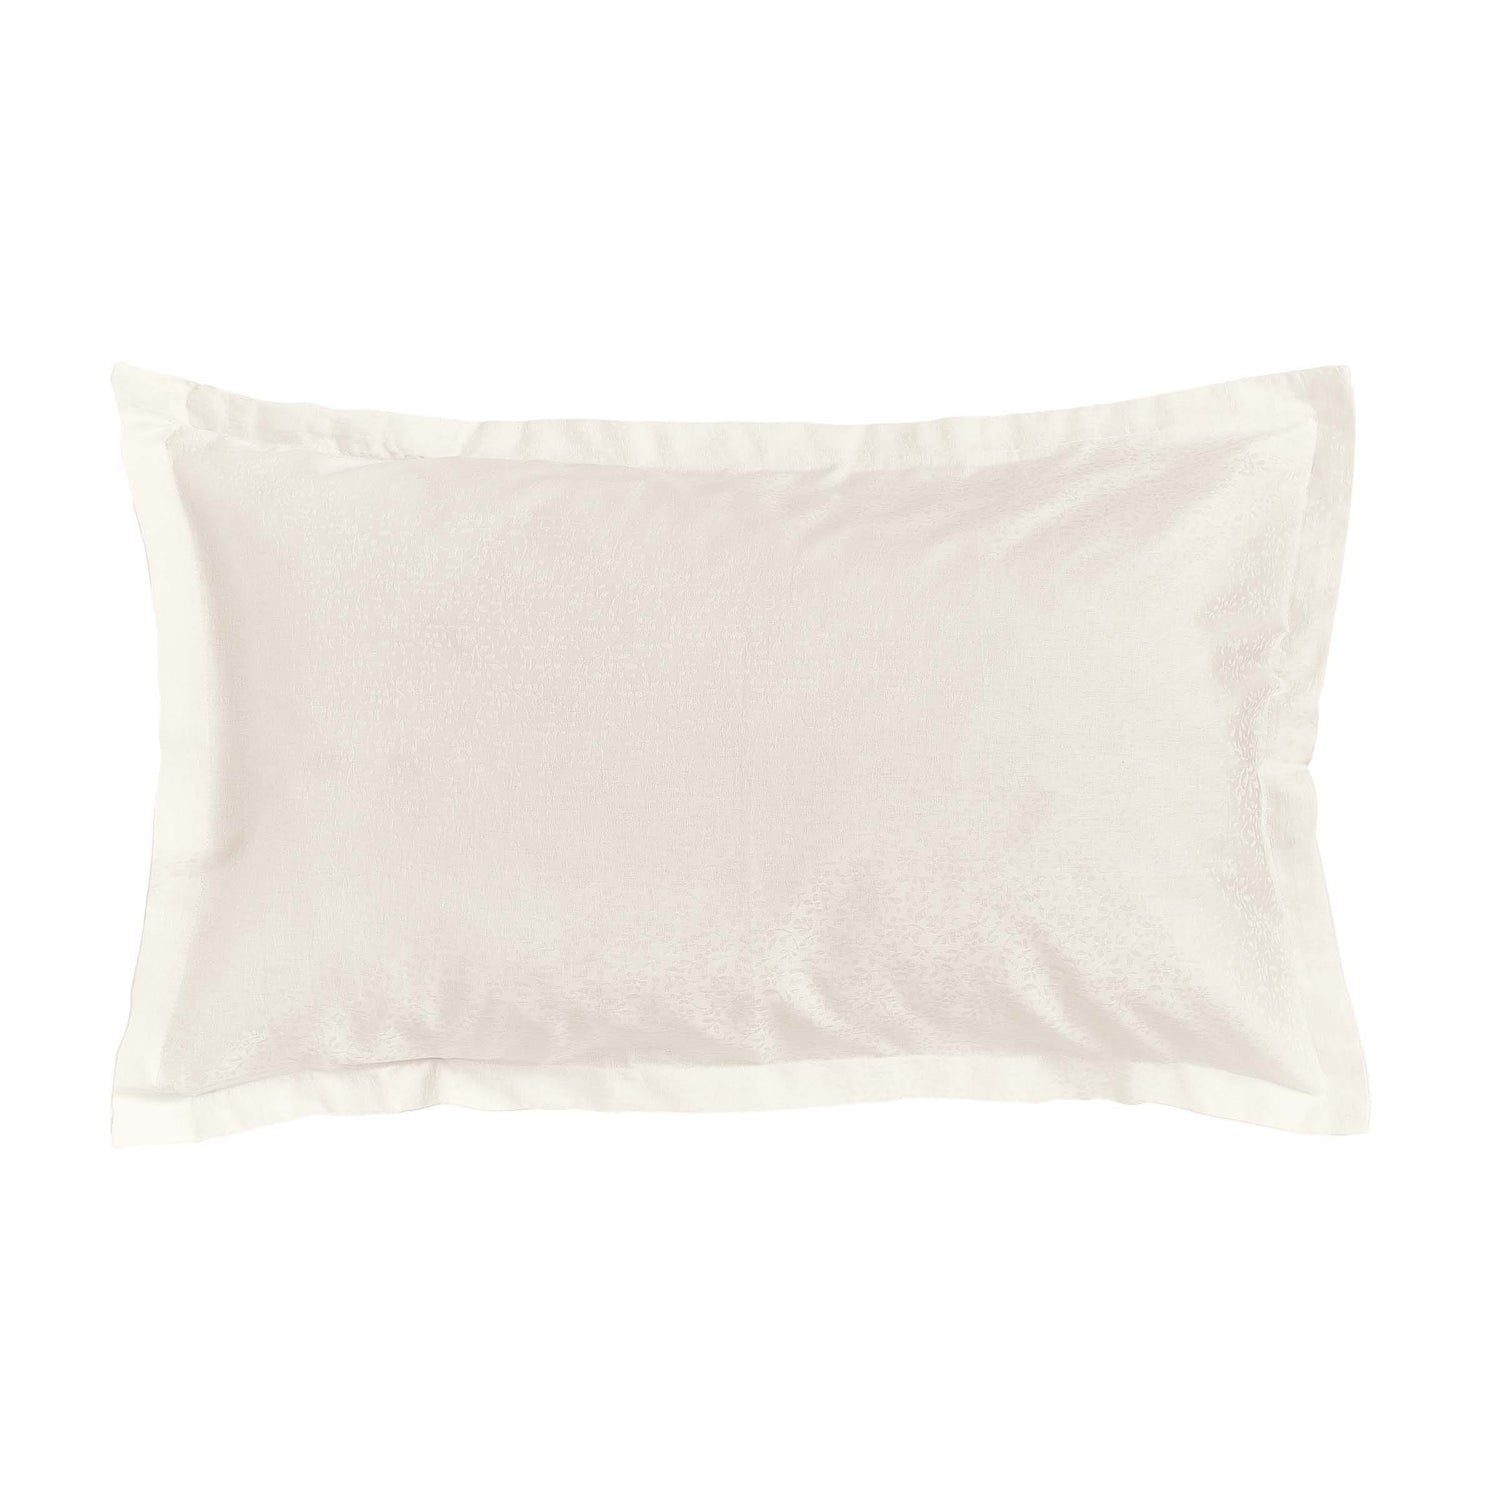 Ivory Jacquard Patterned Murmur Oxford Pillowcase